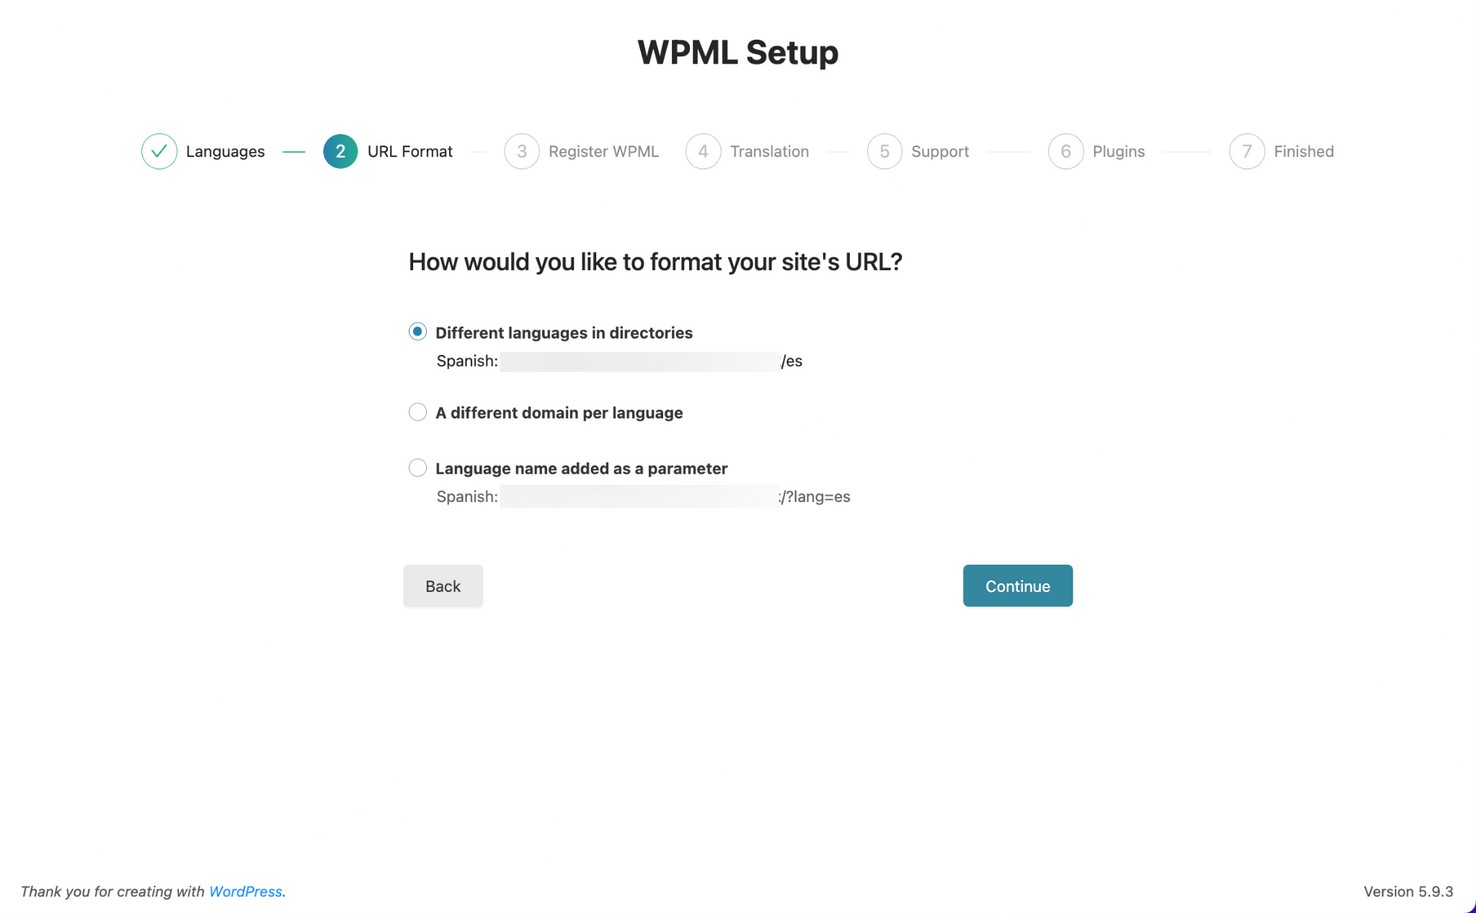 WPML Setup steps